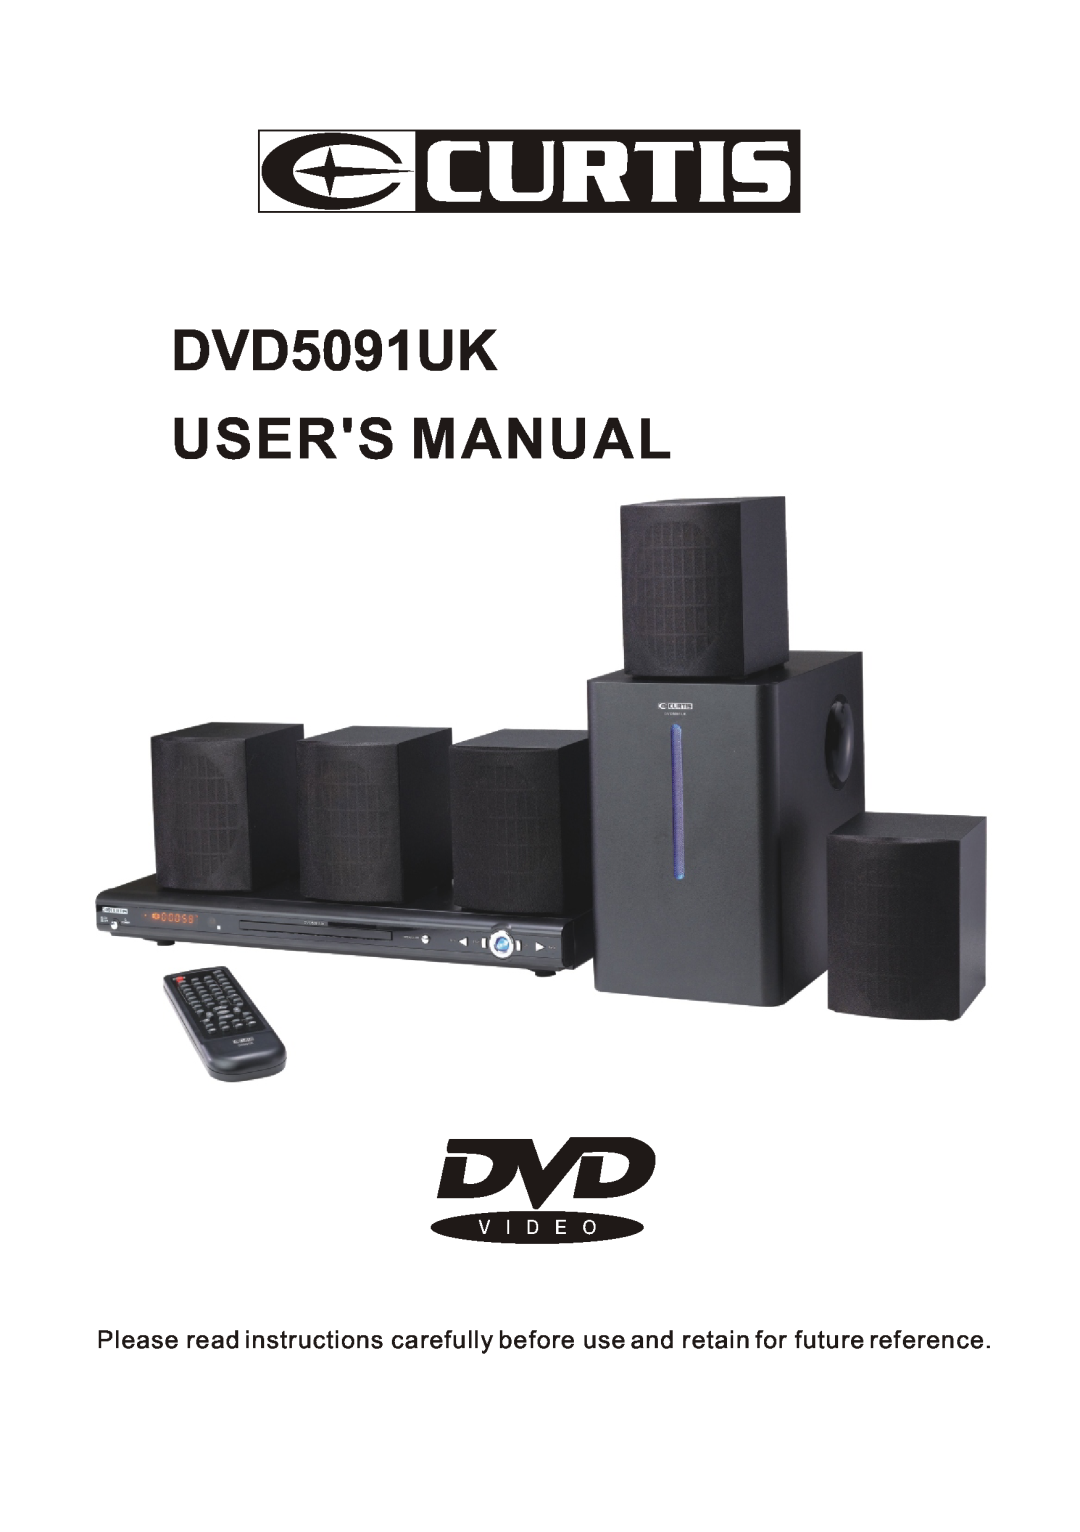 Curtis user manual DVD5091UK USERS MANUAL 